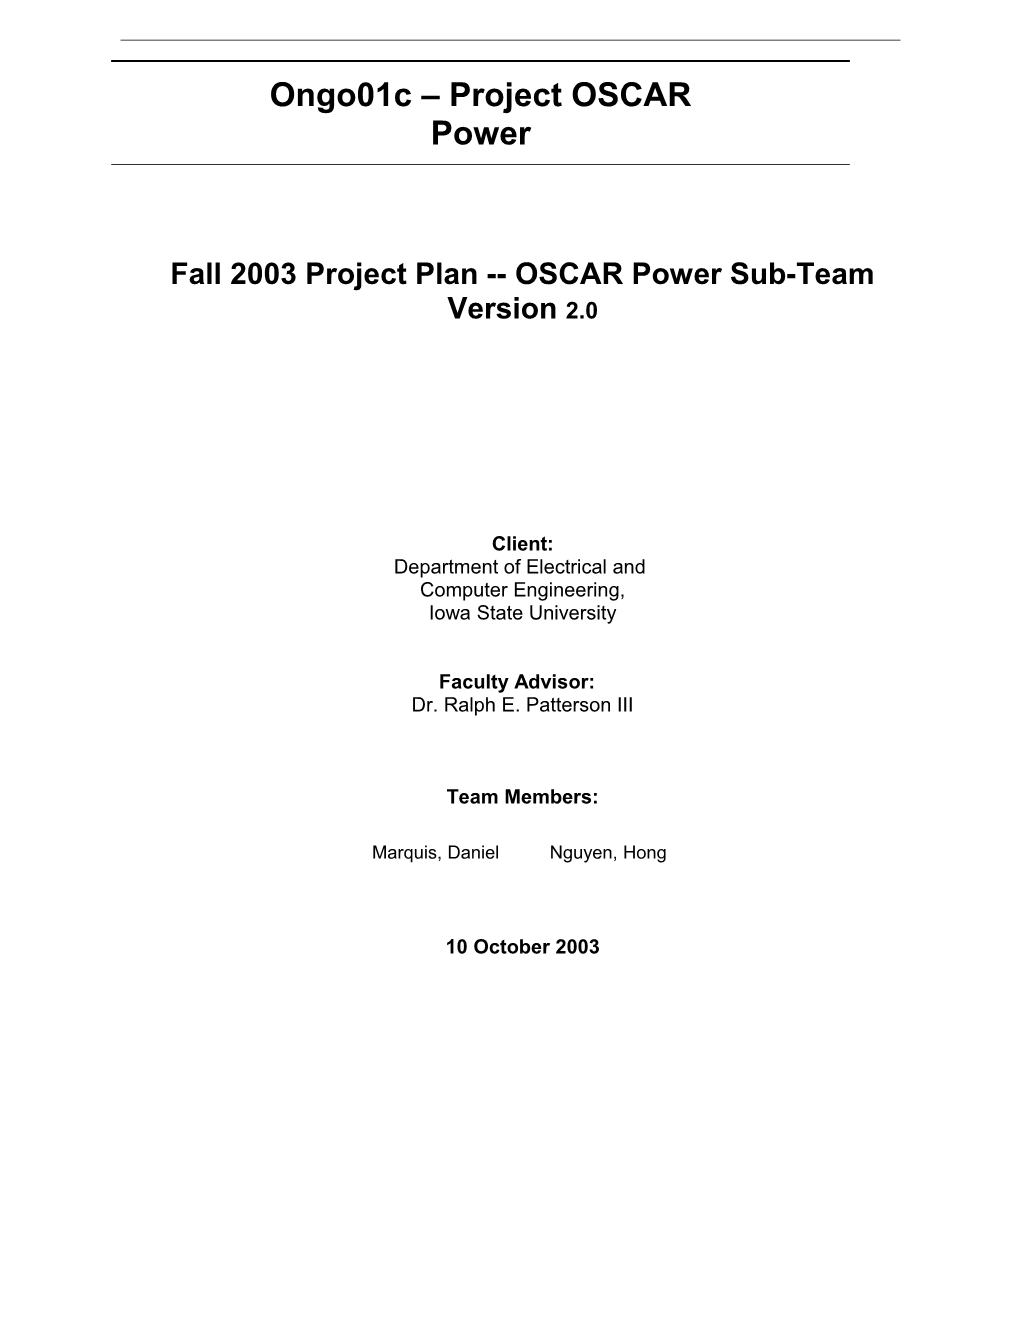 Fall 2003 Project Plan OSCAR Power Sub-Team